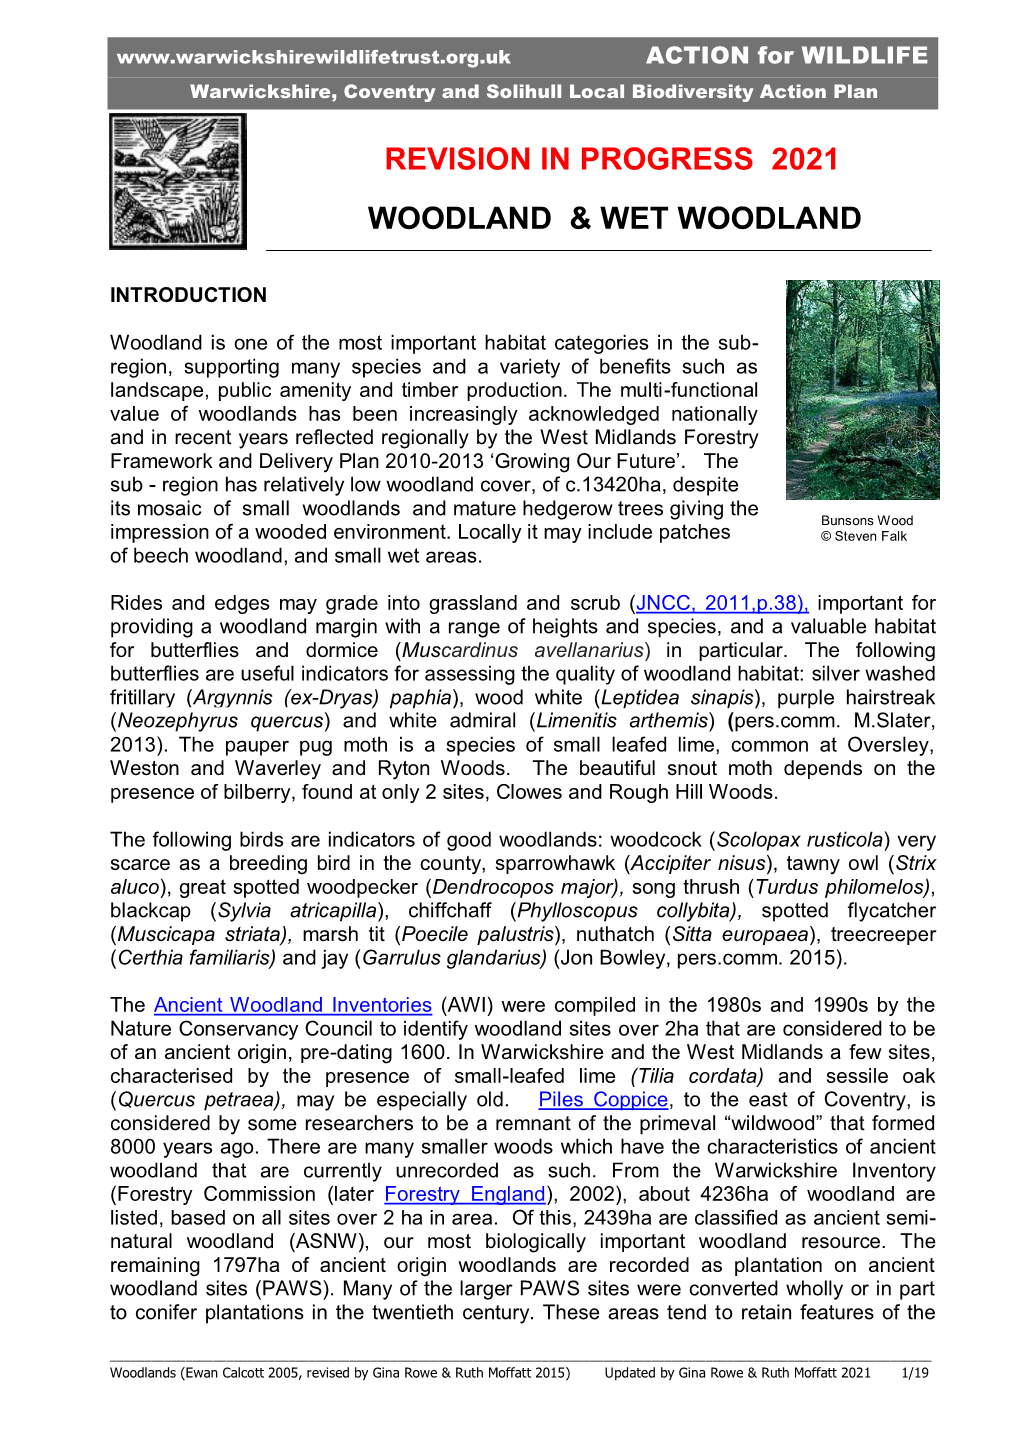 Woodland Update in Progress 2021